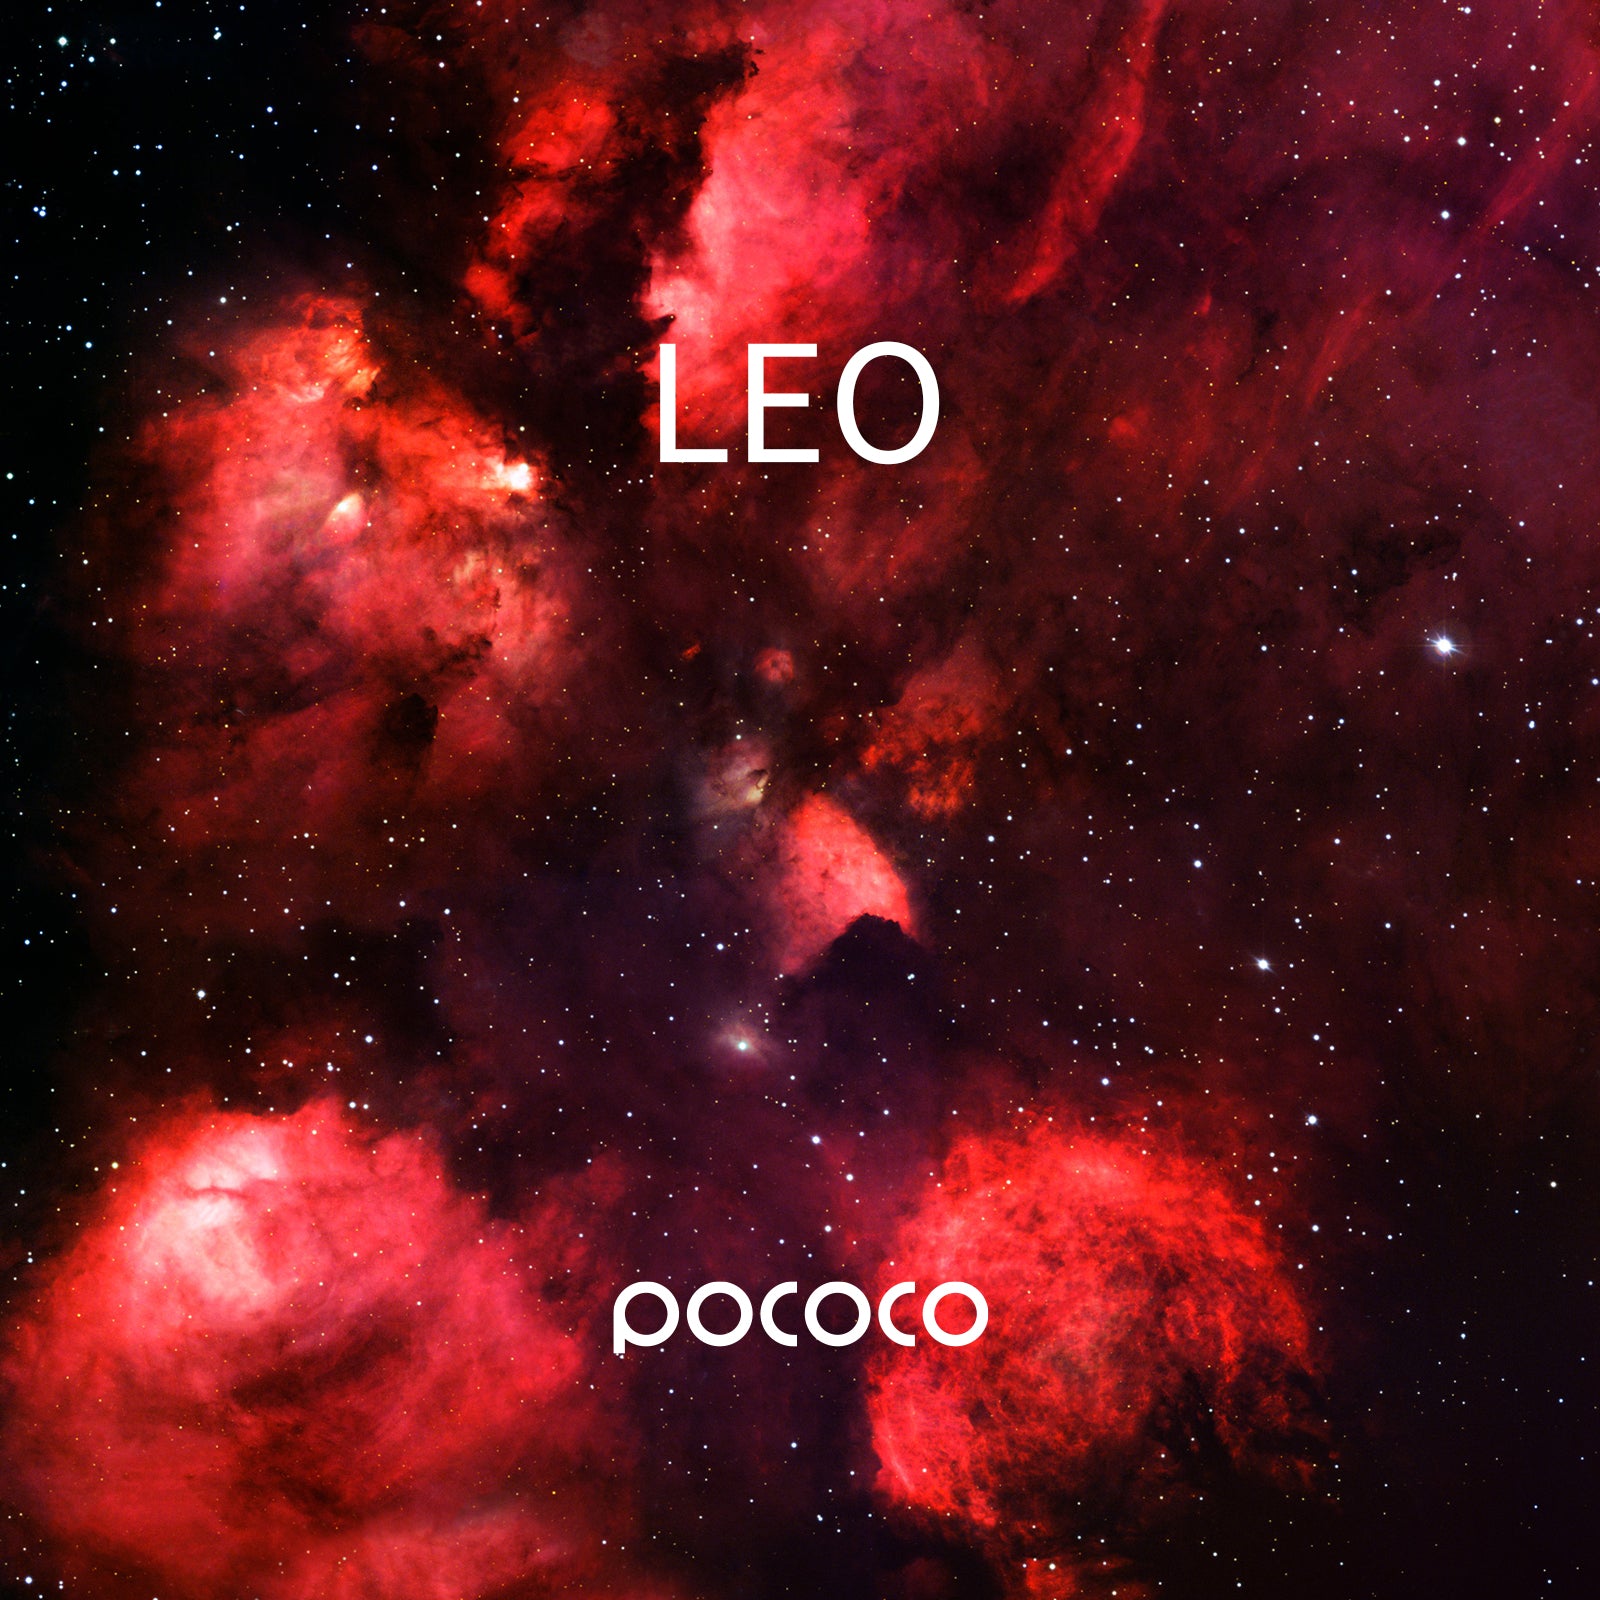 Pococo Galaxy Projector plus my new dreamy nature discs 🥳✨ In my bio!